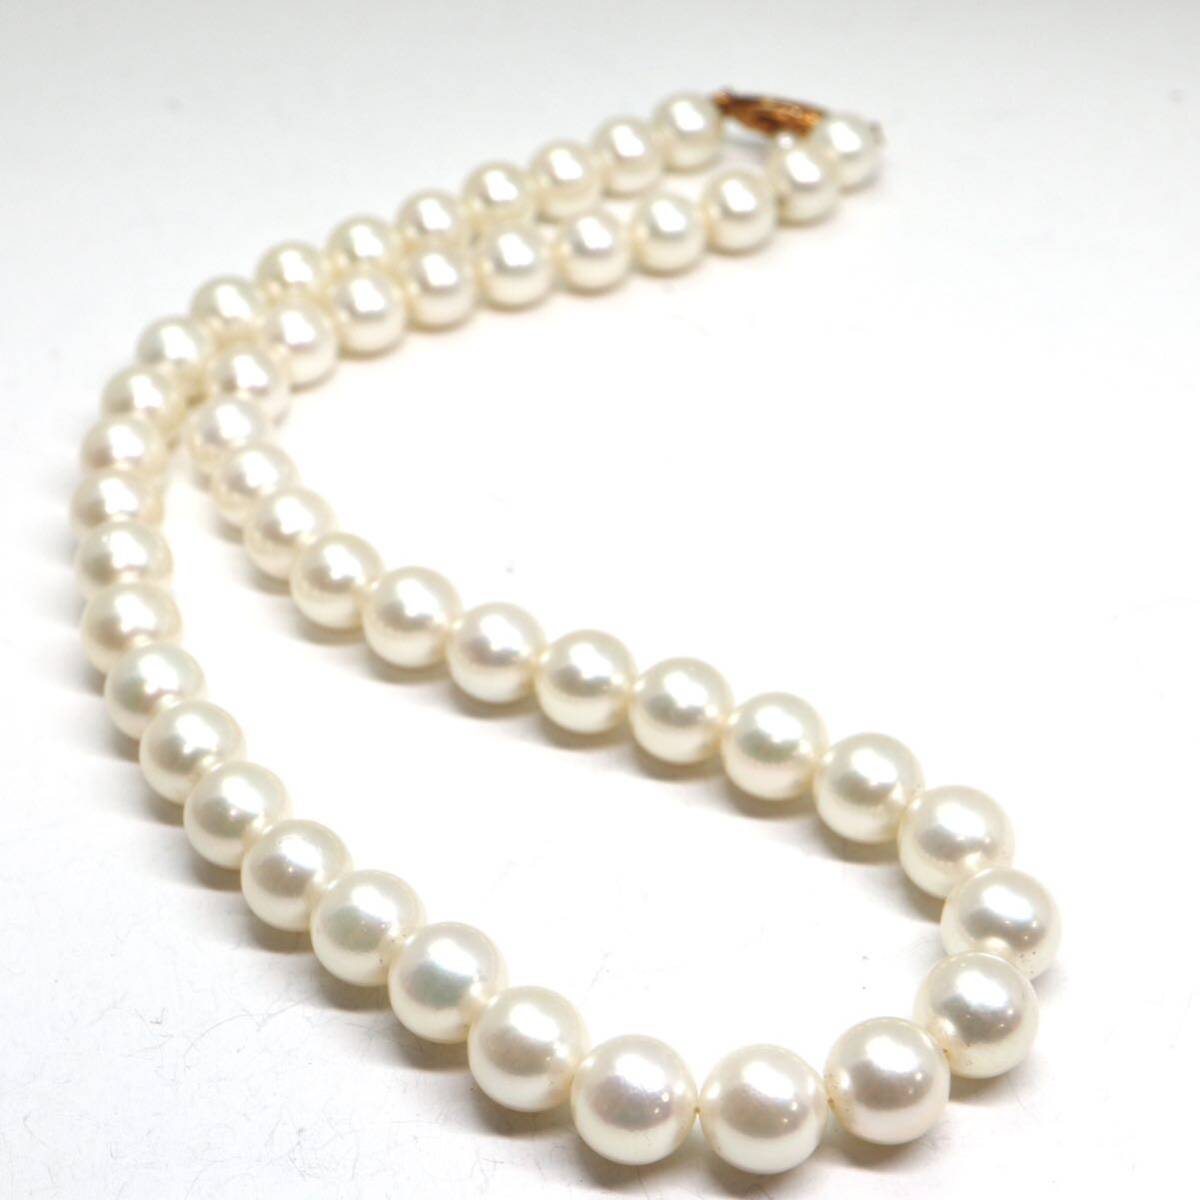 《K14 アコヤ本真珠ネックレス》A 約7.5-8.0mm珠 32.4g 約37.5cm pearl necklace ジュエリー jewelry DE0/DE0